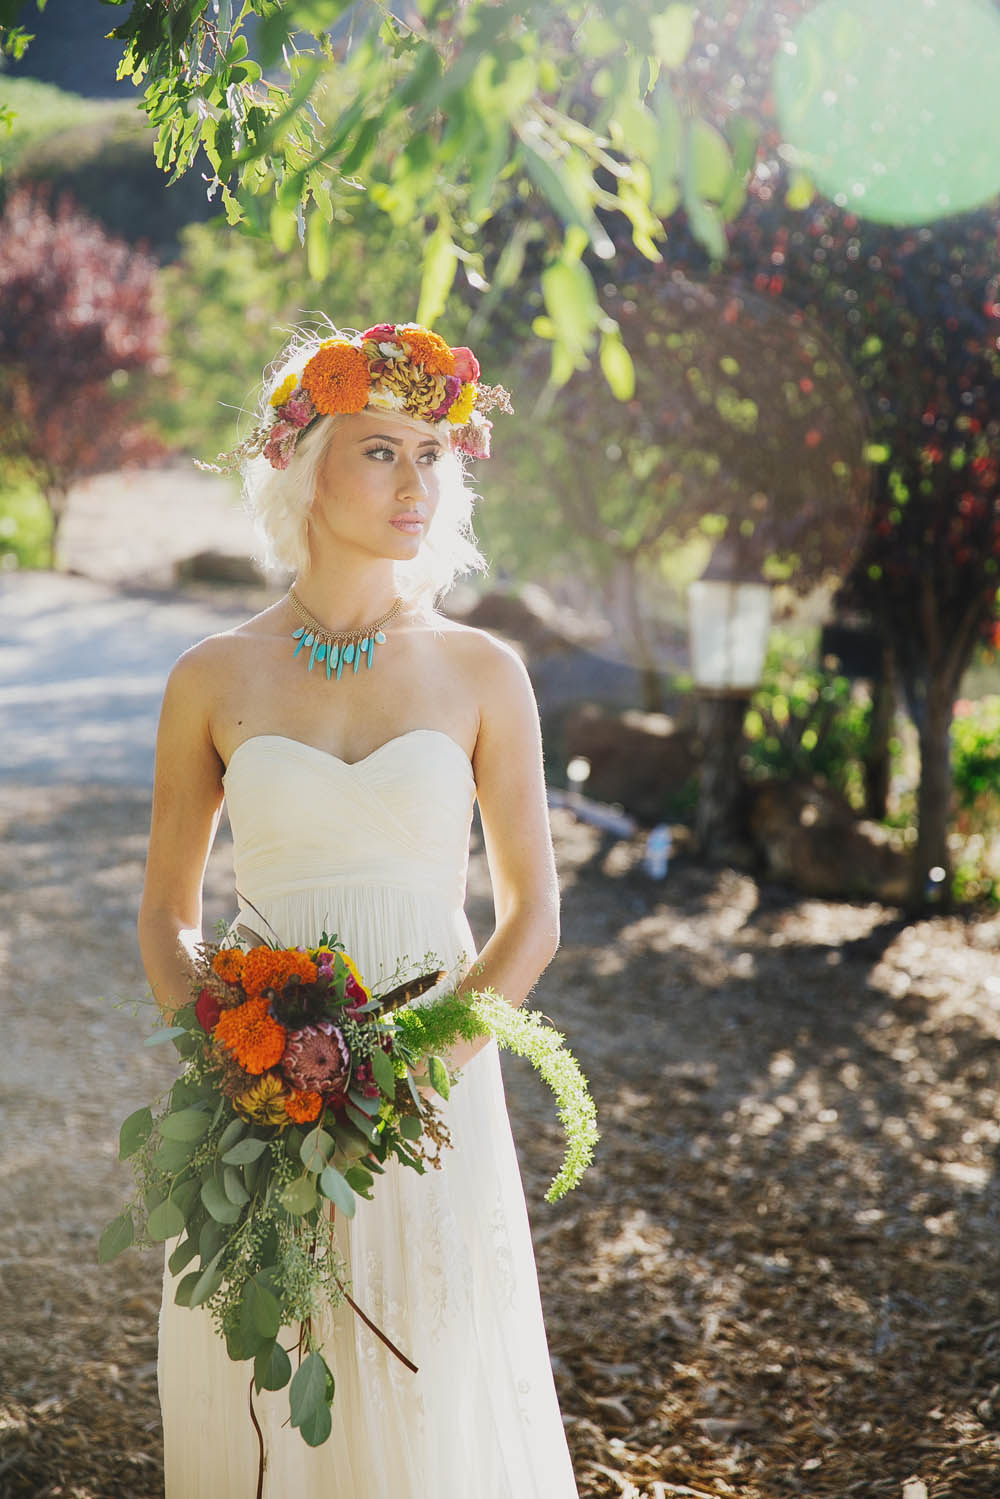 More information about "Part 3: Wedding Bouquet Inspiration"